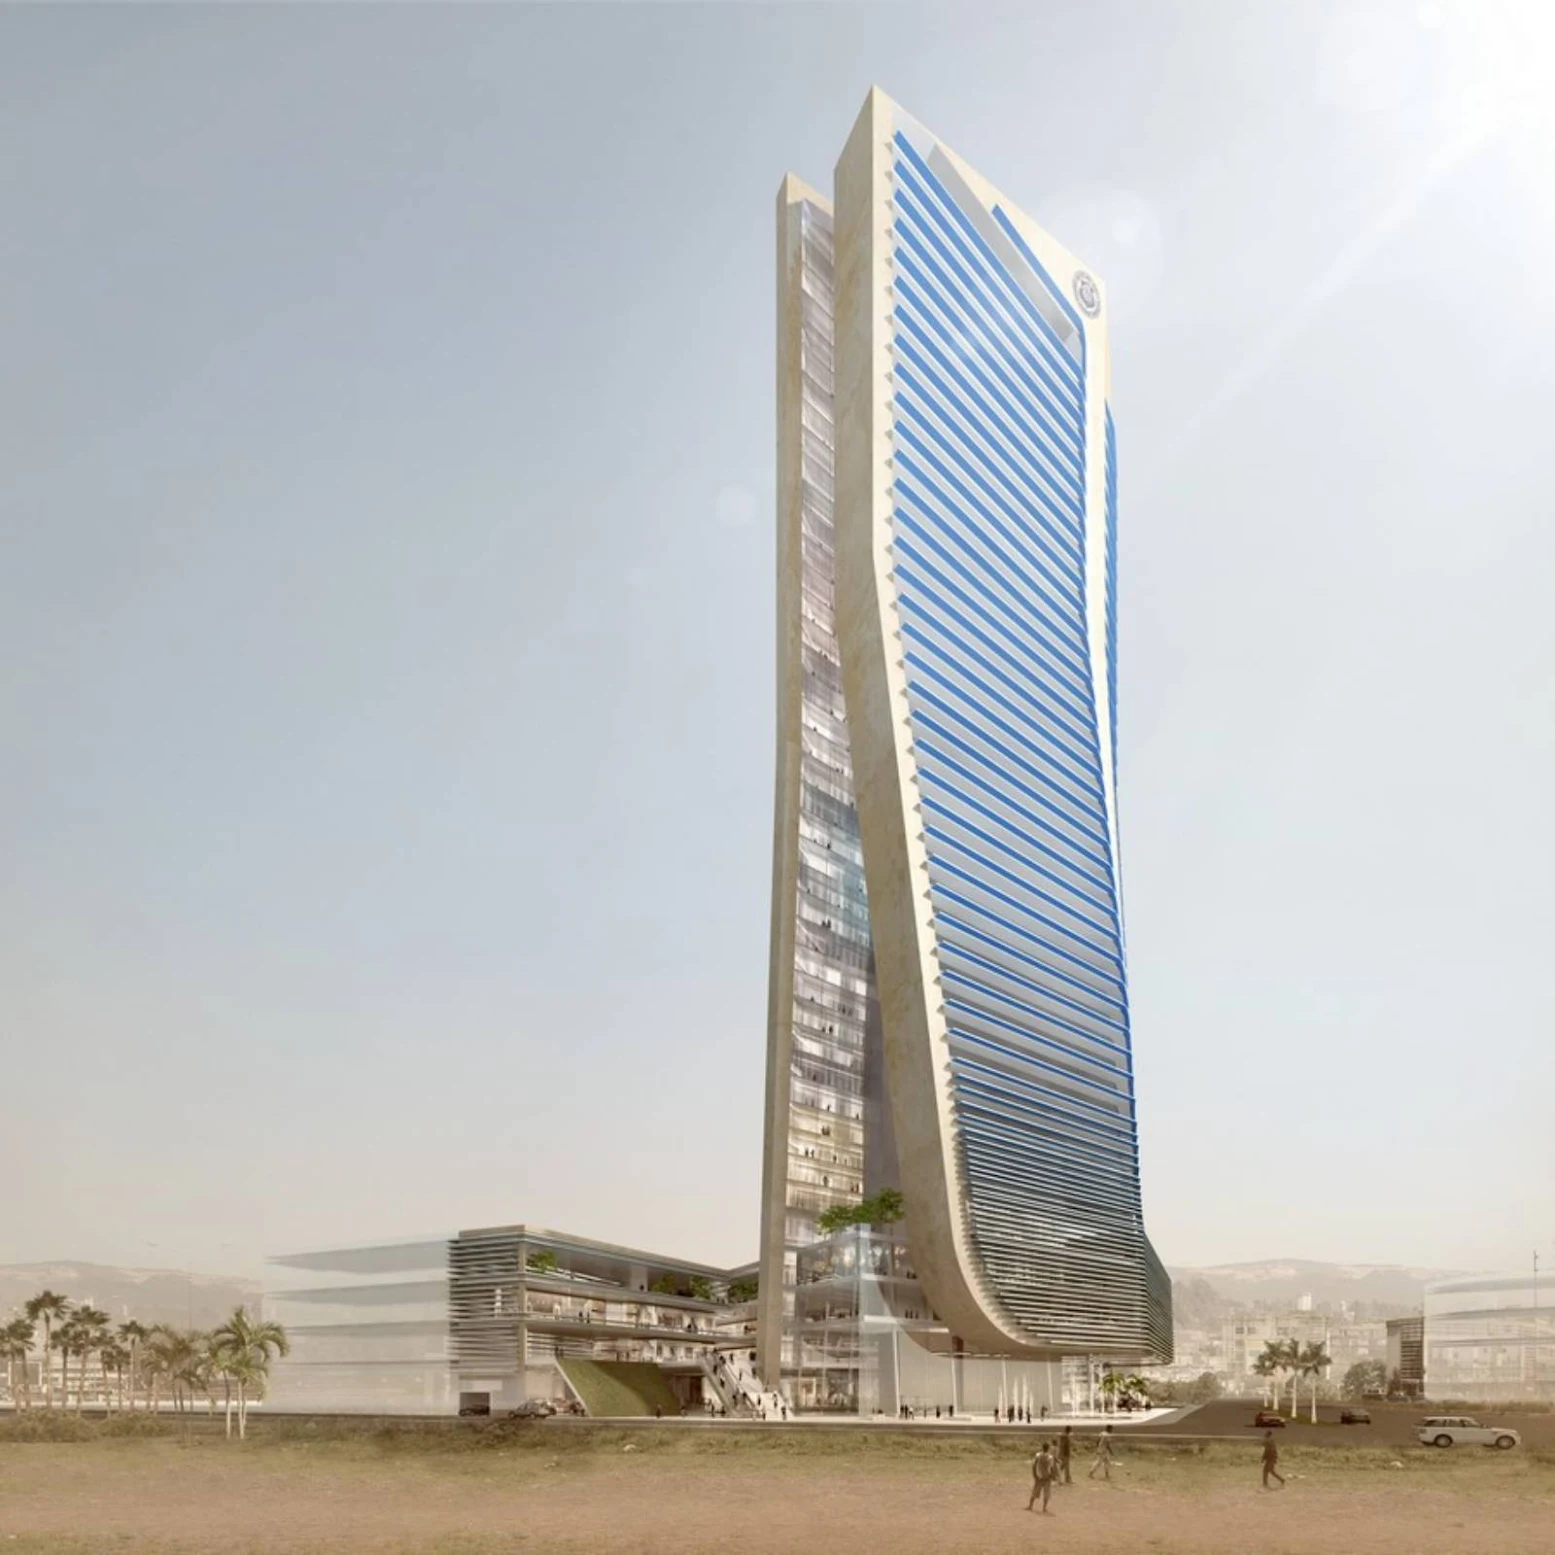 Ethiopian Insurance Corporation by Sohne Partner Architects